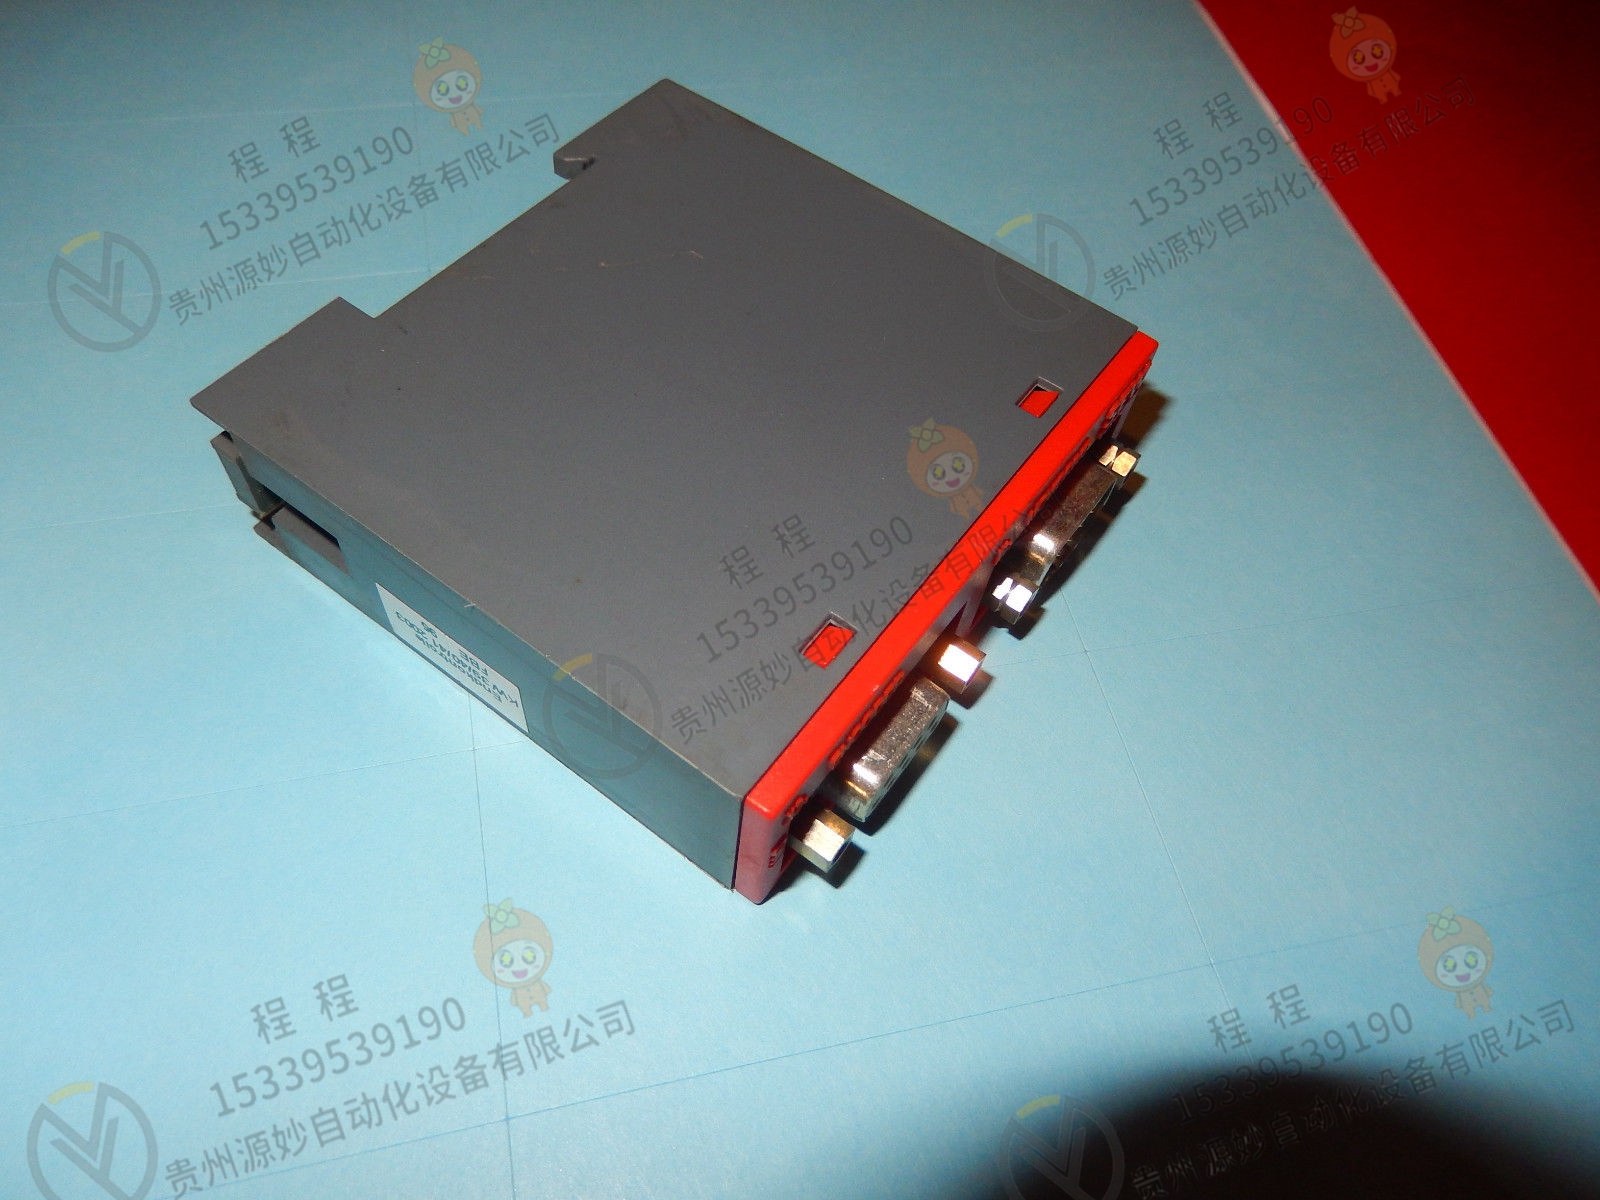 SEW   MDX61B0150-503-4-0T  变频器